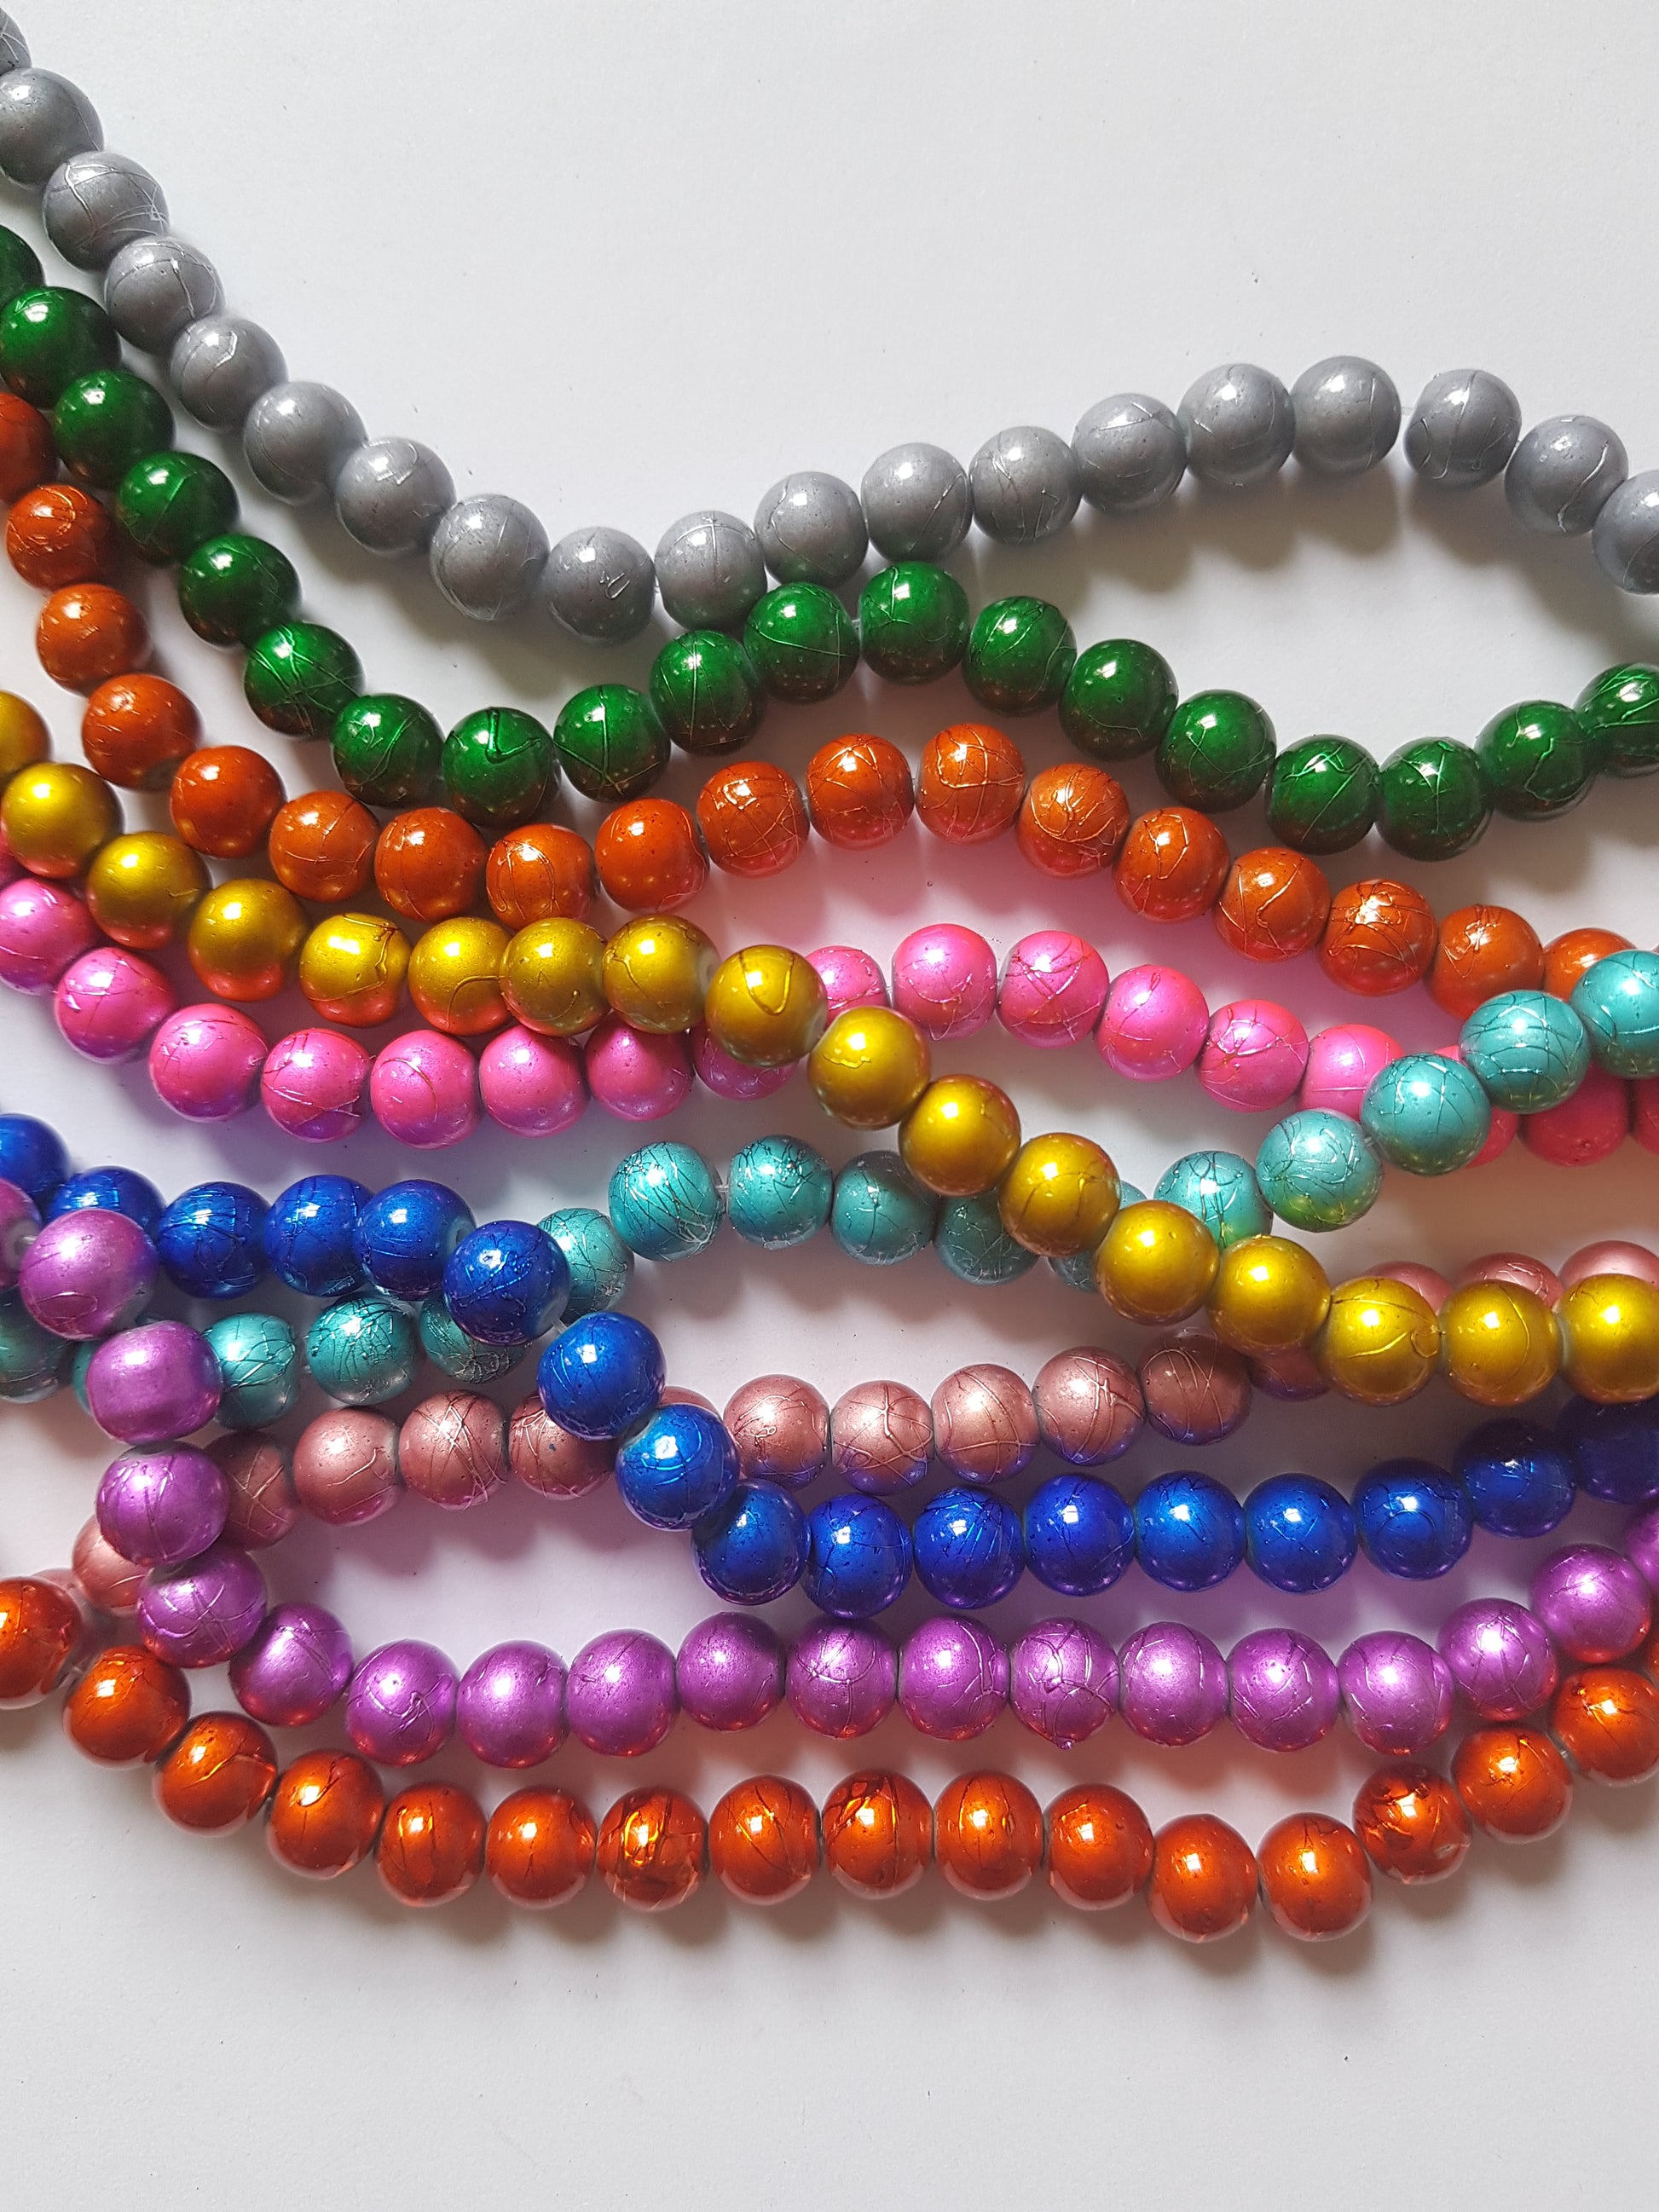 8mm metallic drawbench glass beads